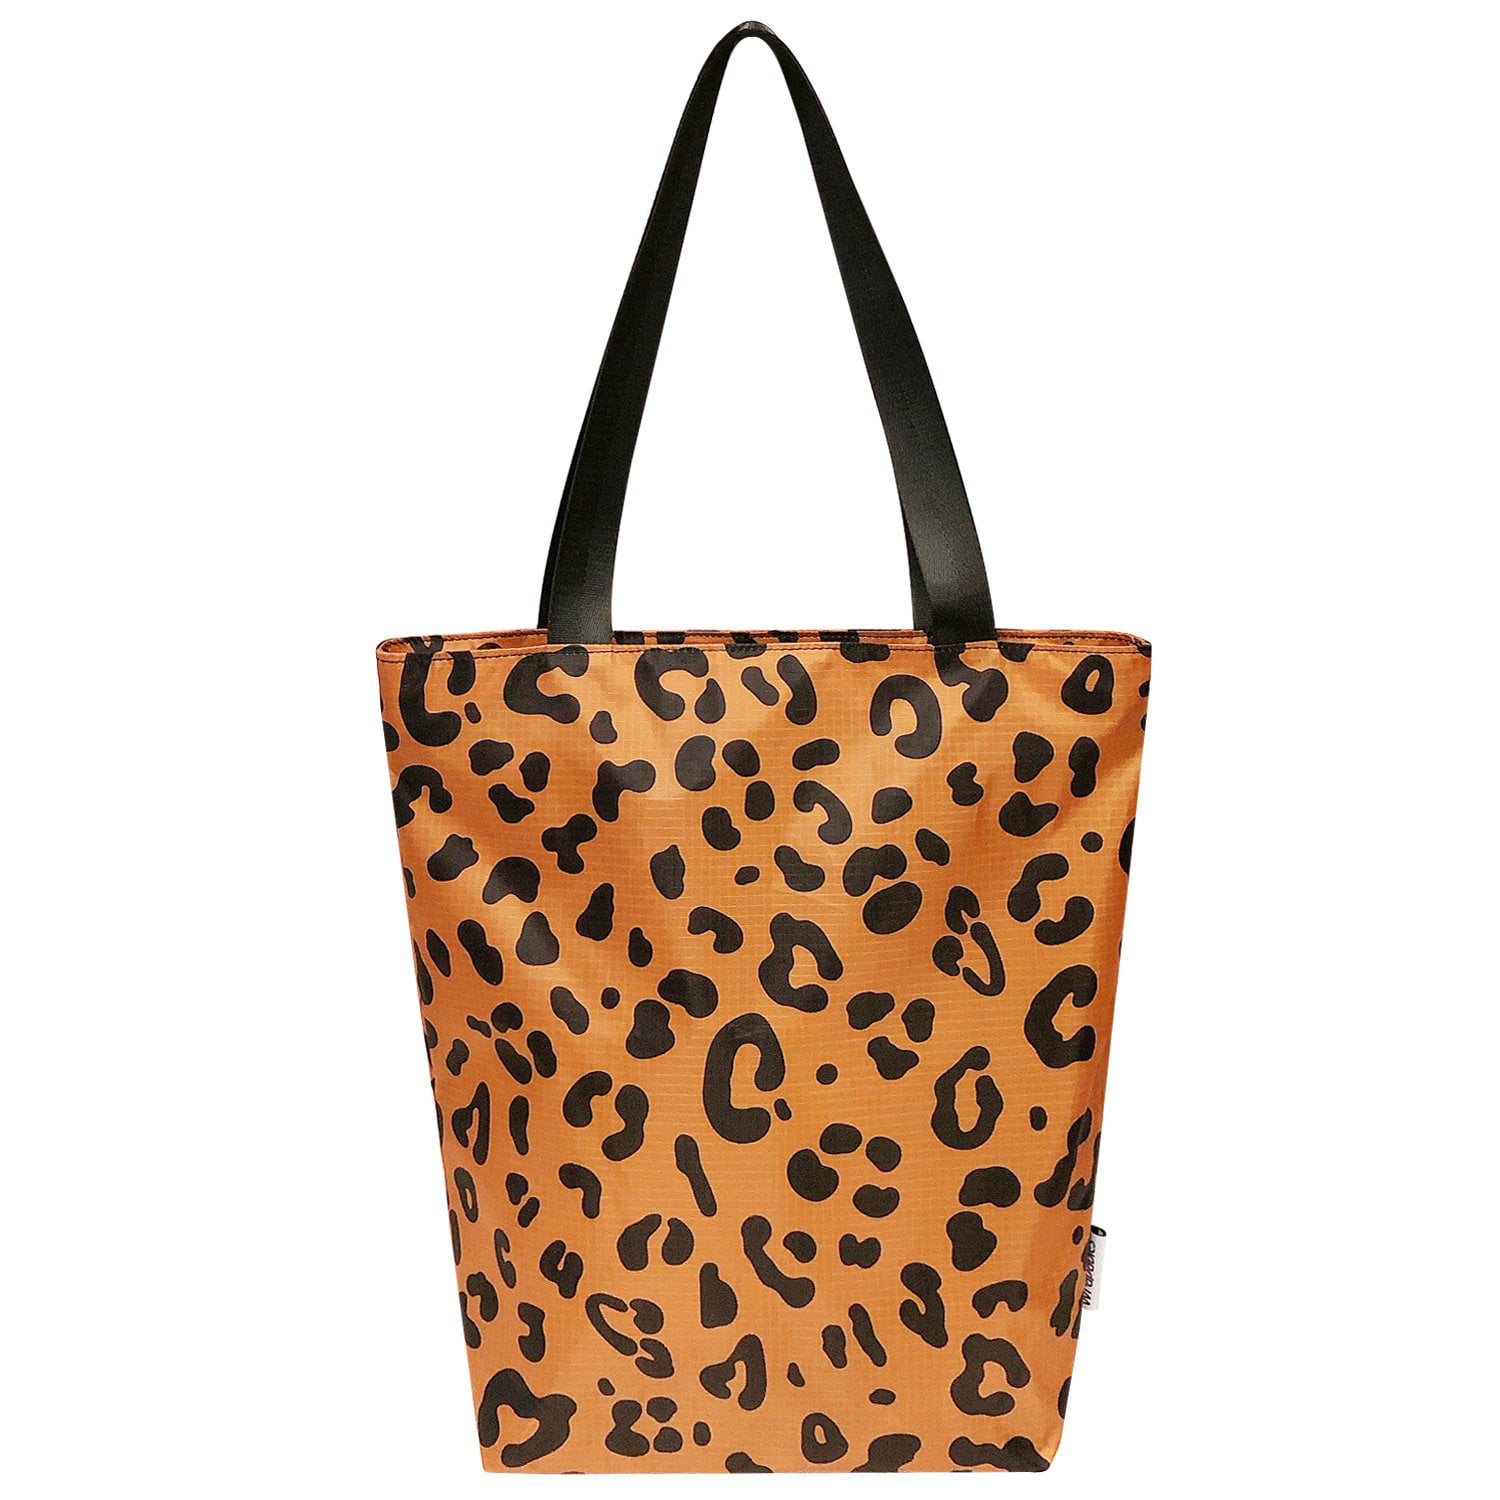 Leave me alone cat lover Tote bag Shopping bag gift uk seller free postage 